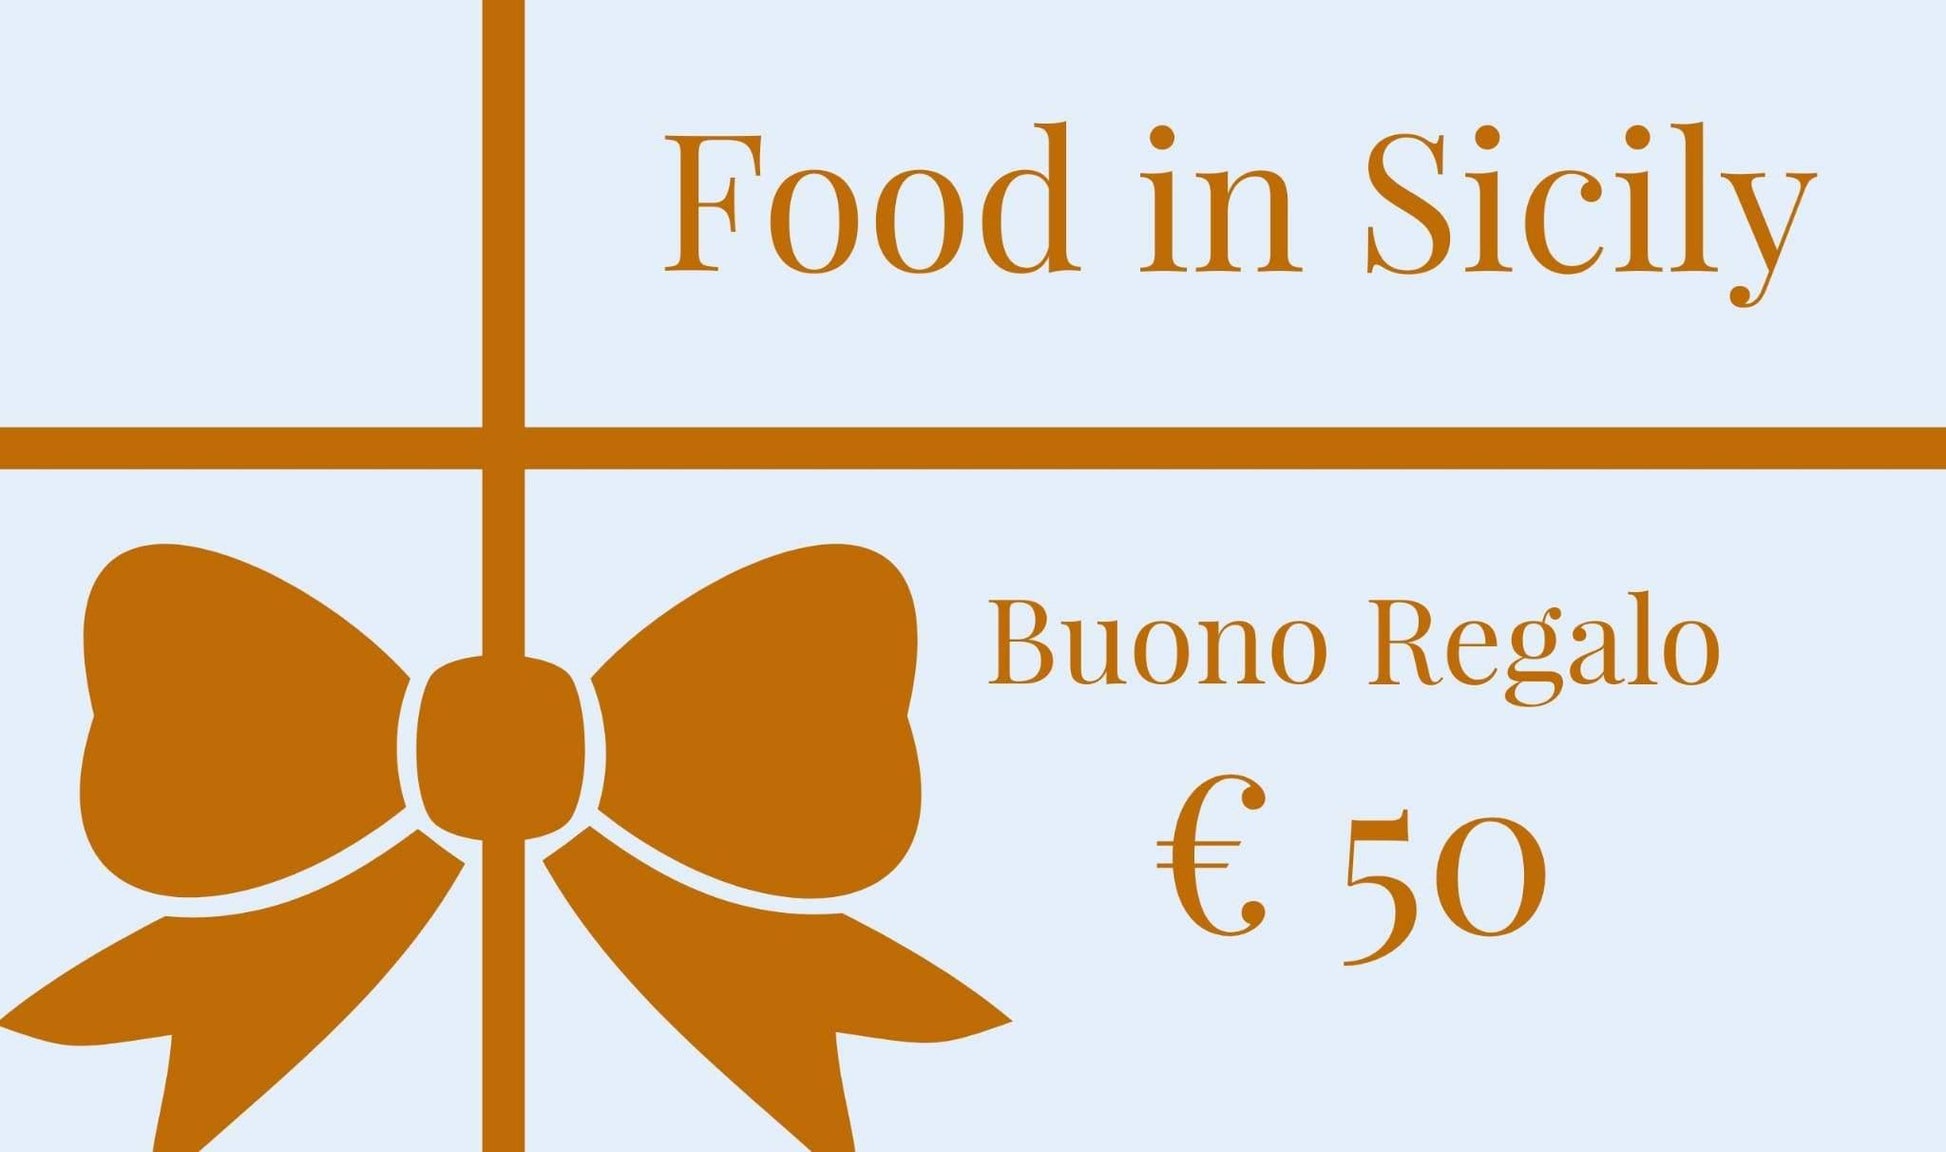 Buono Regalo Food in Sicily Buono Regalo Food in Sicily 50,00 € 